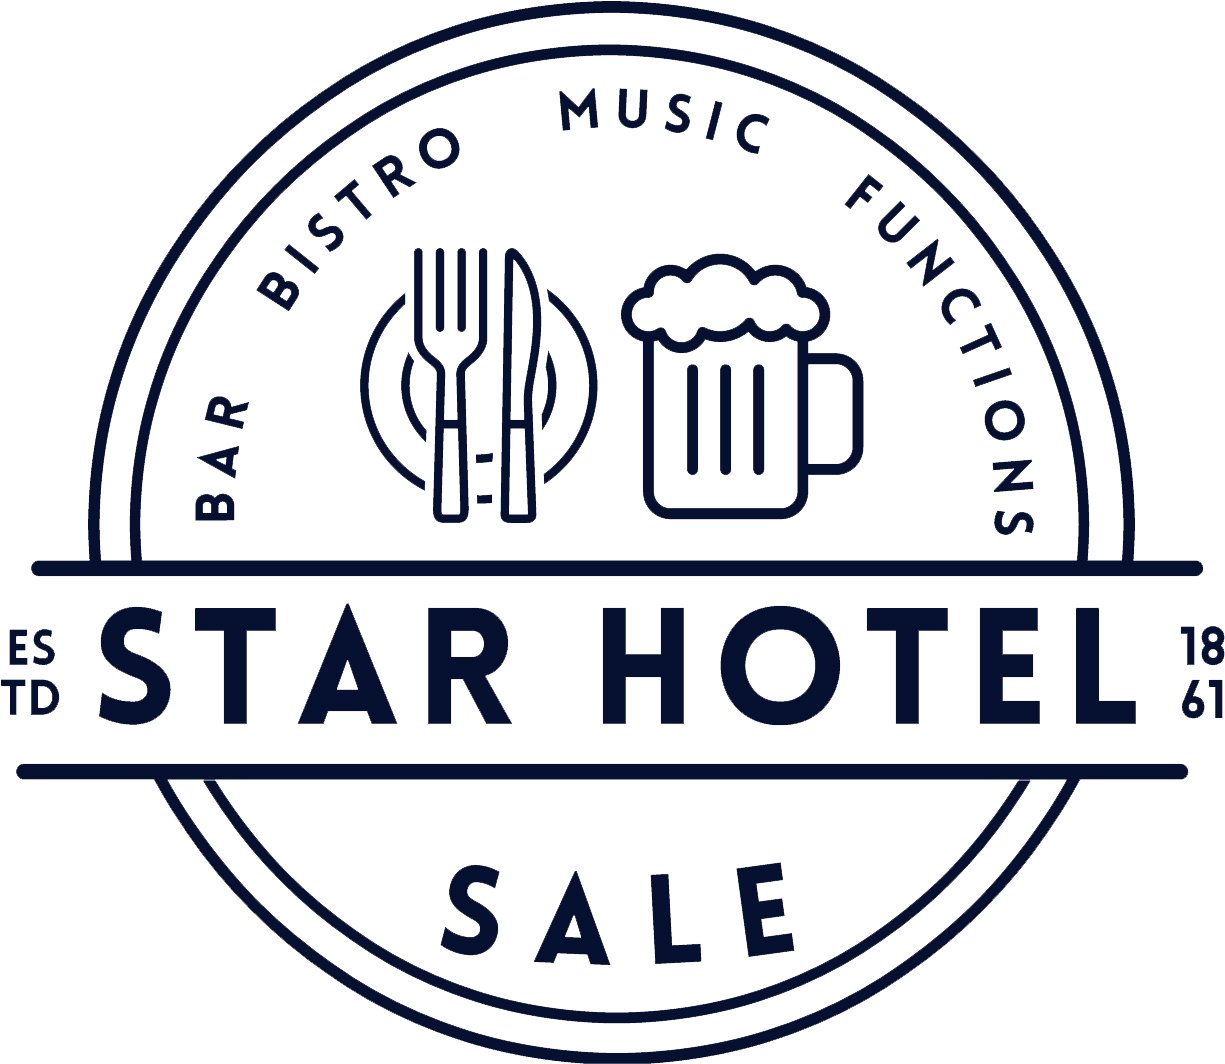 Star Hotel Sale